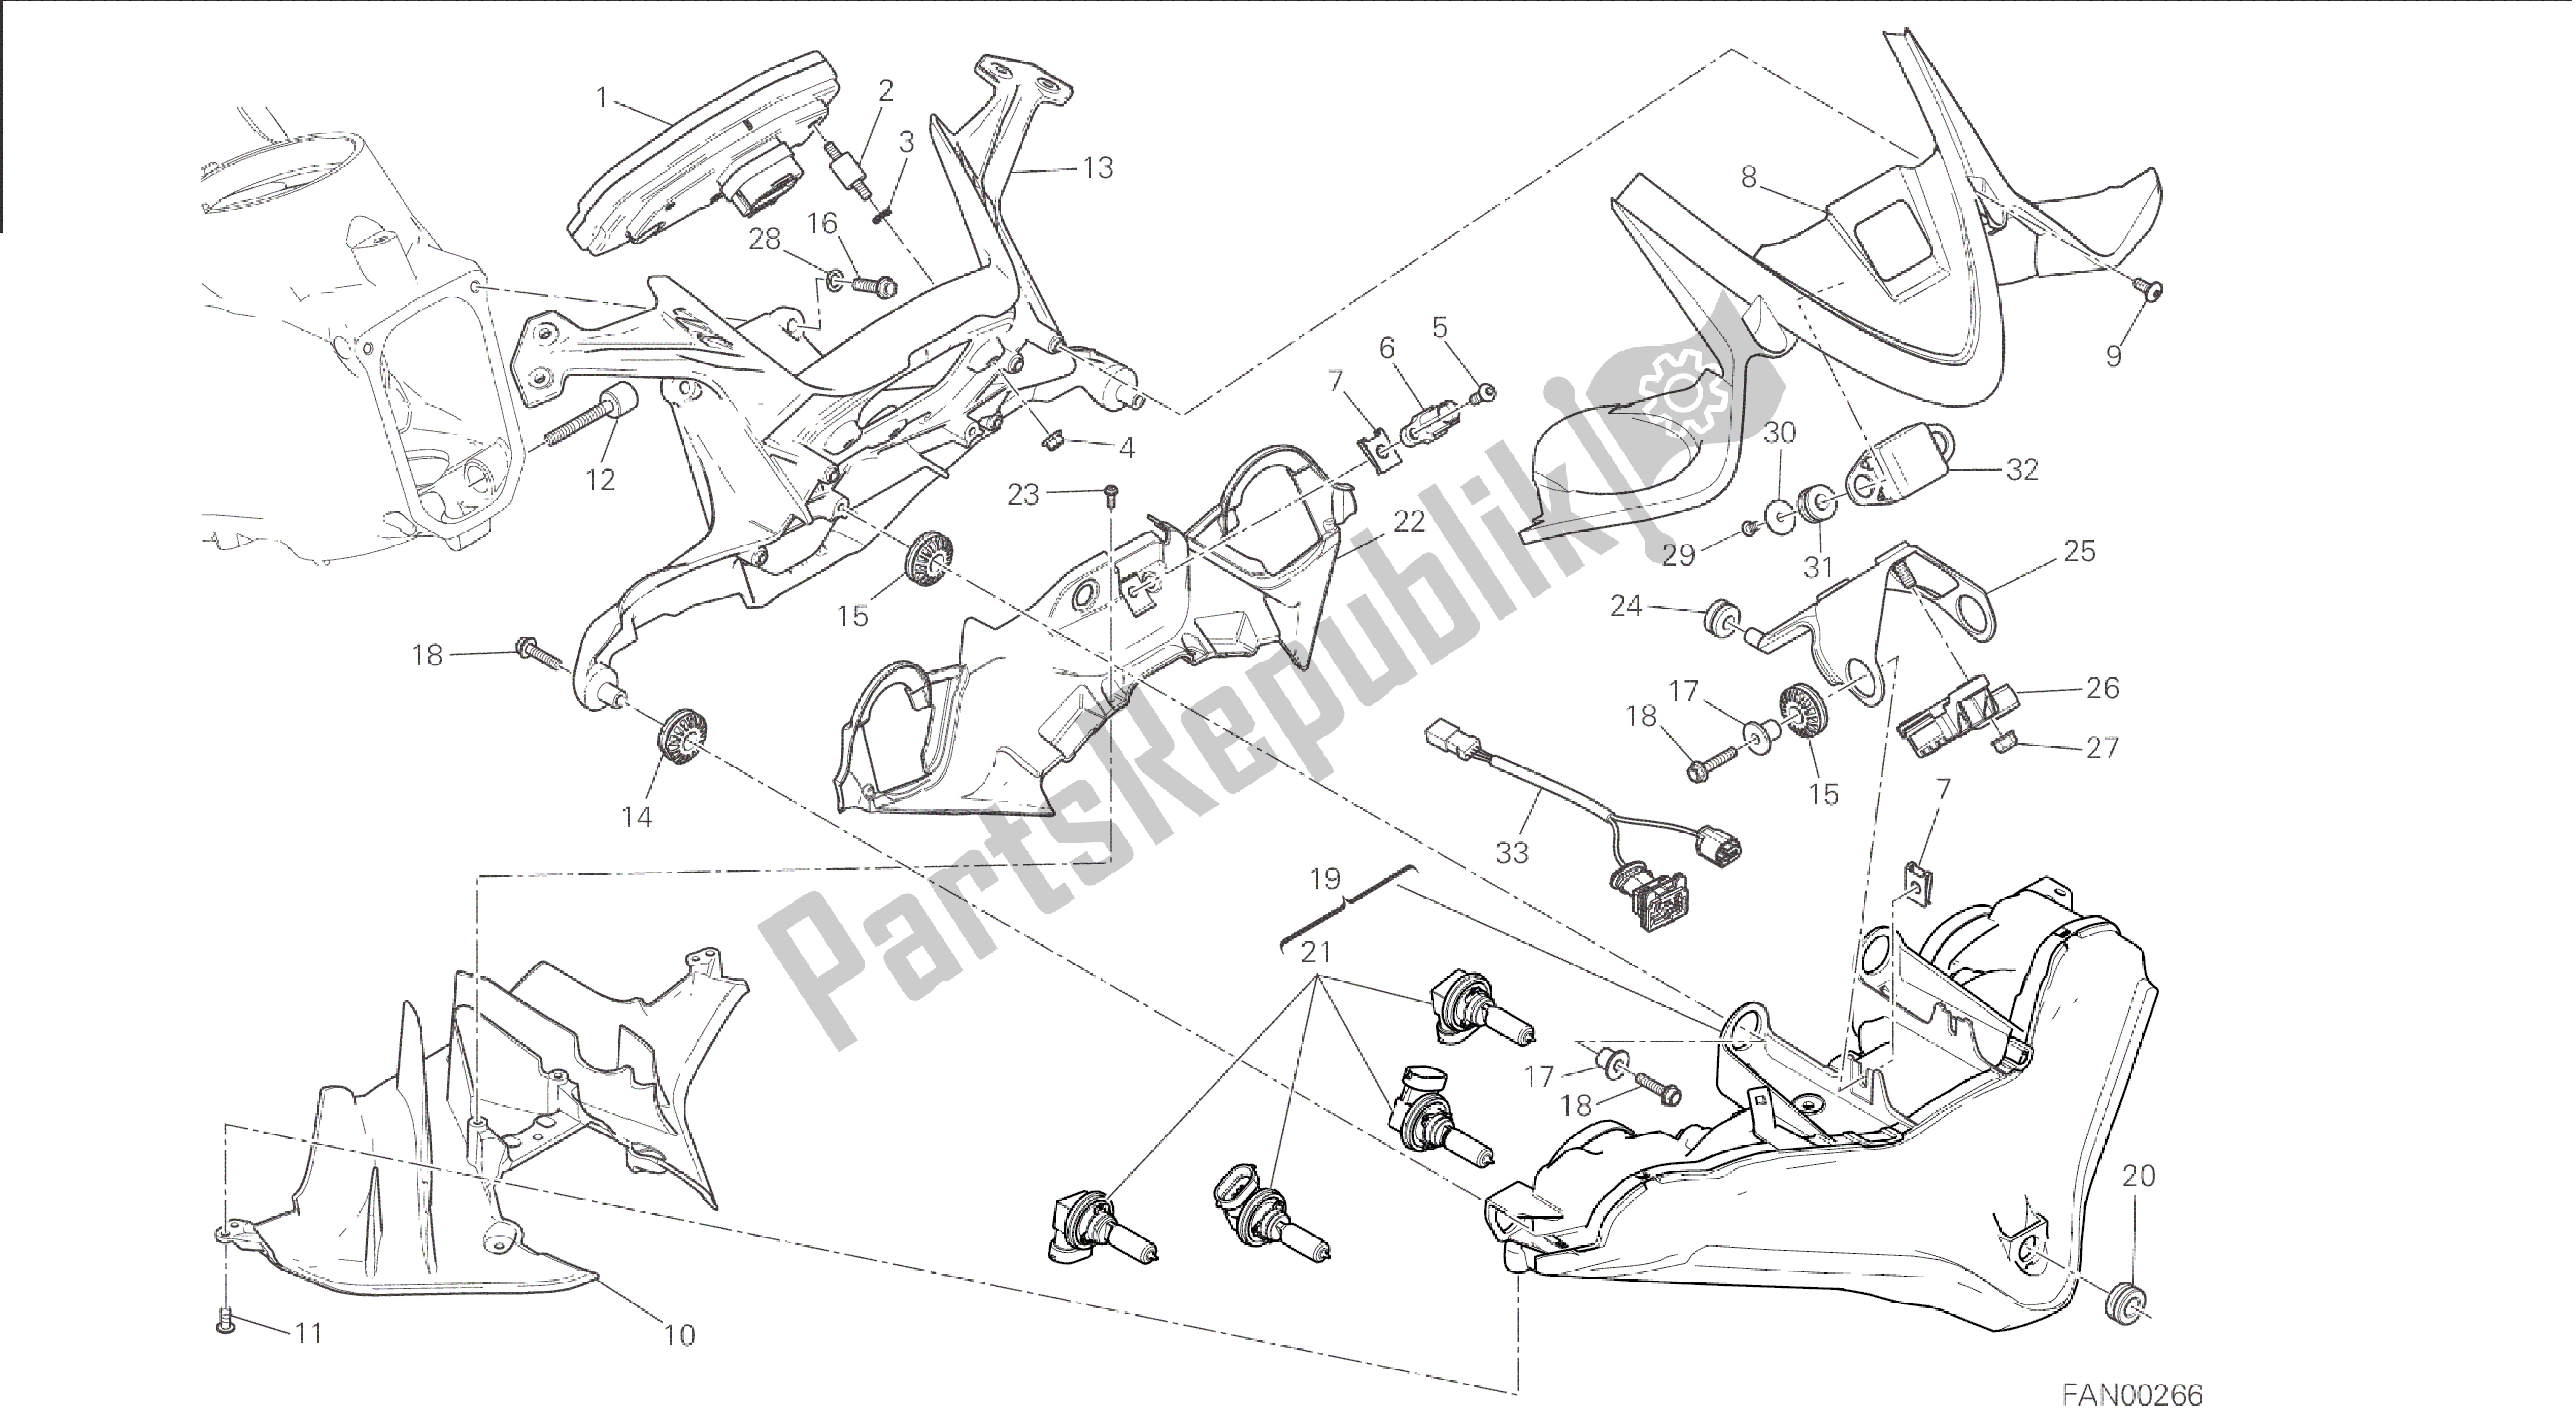 Alle onderdelen voor de Tekening 020 - Fanale Anteriore E Cruscotto [mod: 1199r; Xst: Aus, Eur, Fra, Jap, Twn] Groepsframe van de Ducati Panigale 1198 2015